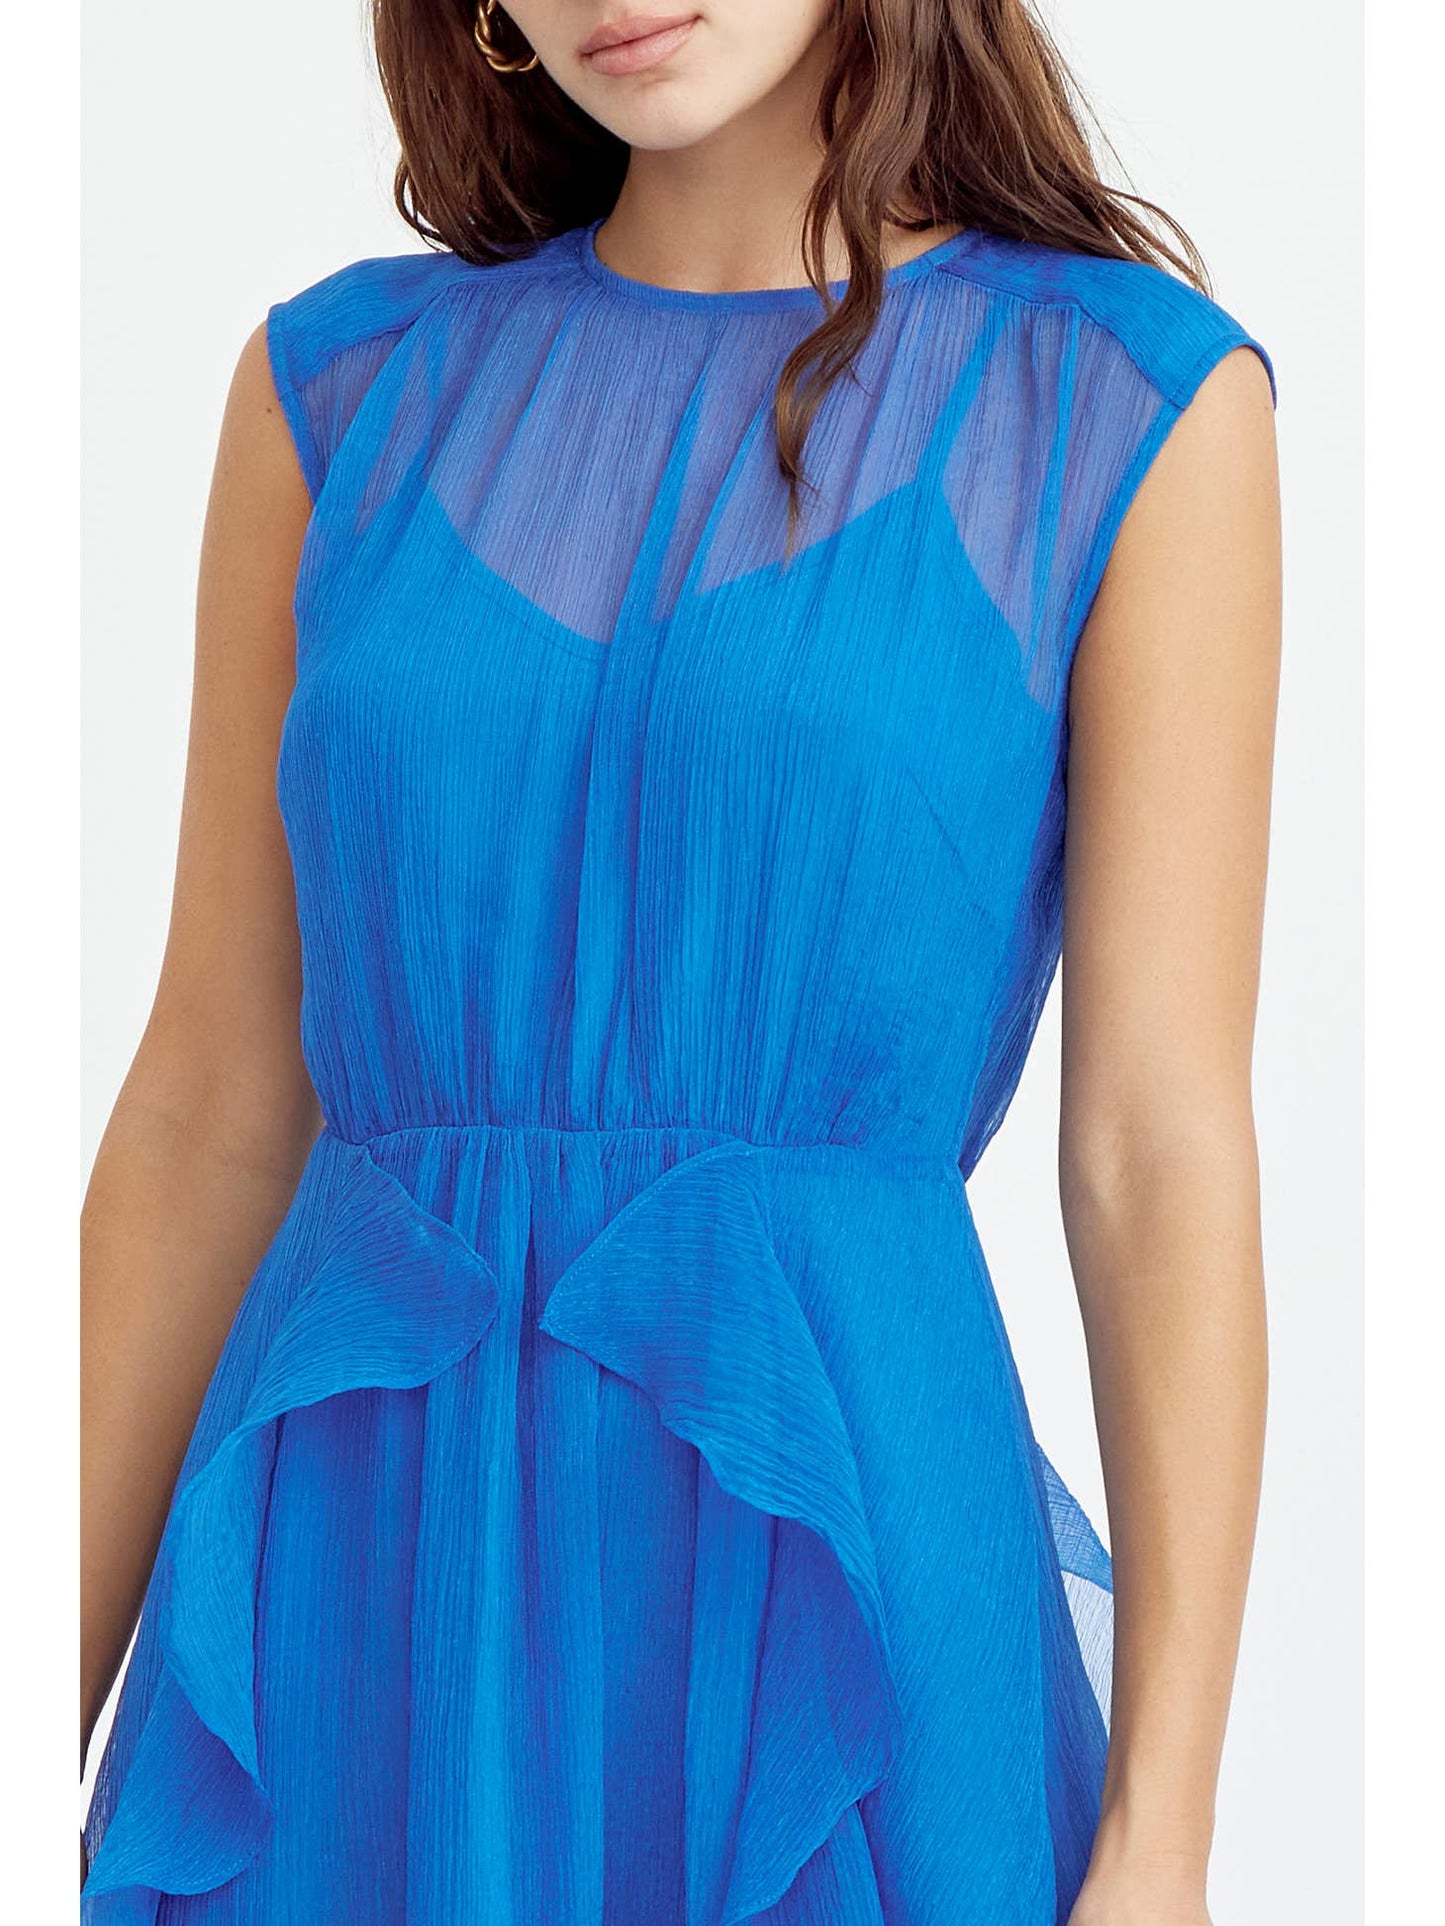 Adelyn Rae Rosalie dress Blue Midi dress with ruffle detail 